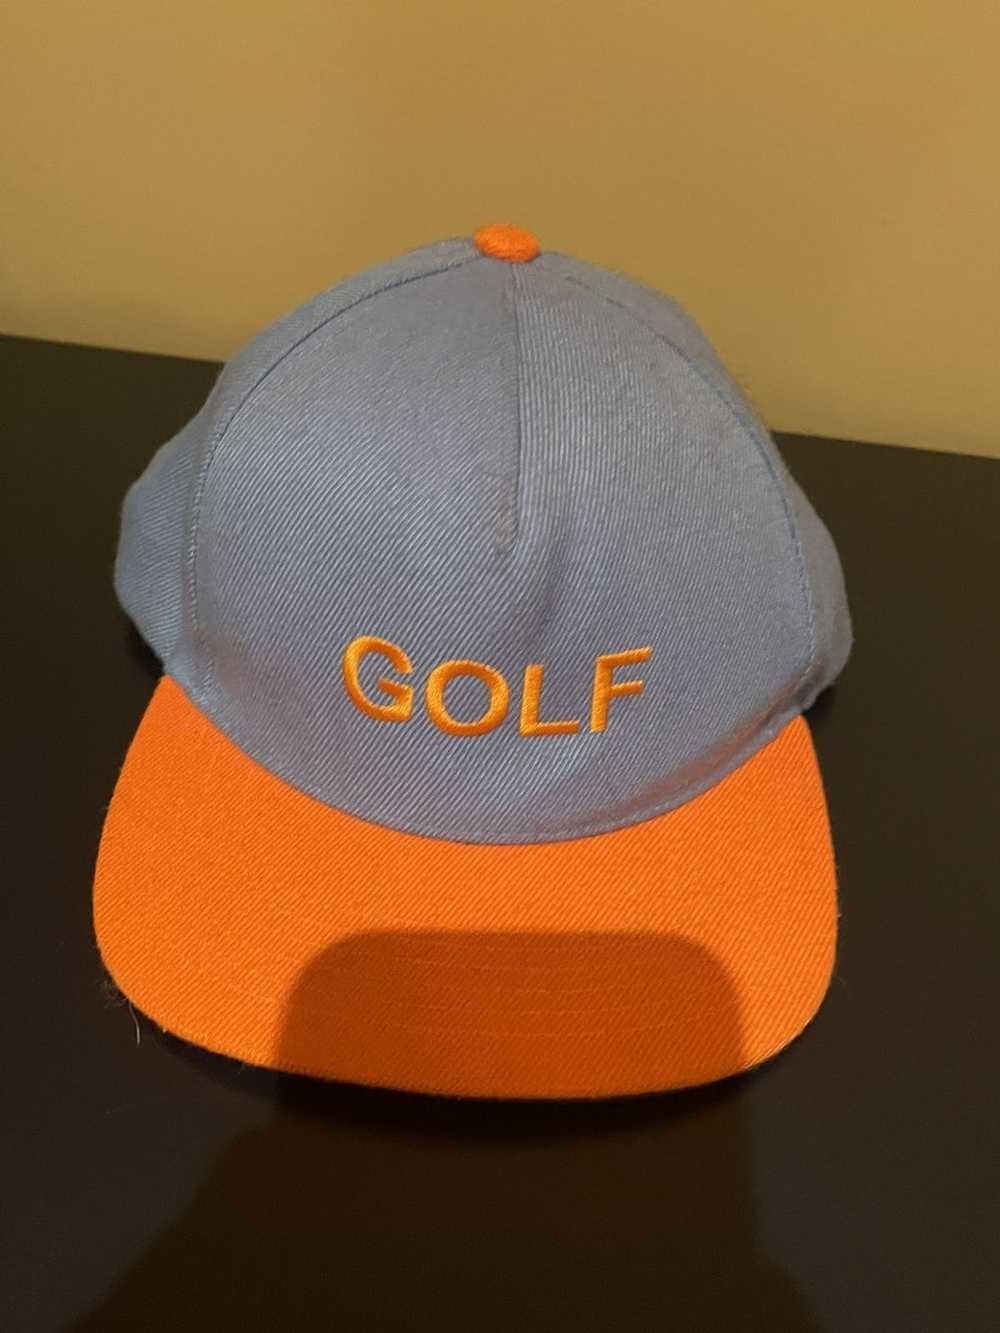 Golf Wang Blue orange golf hat - image 1